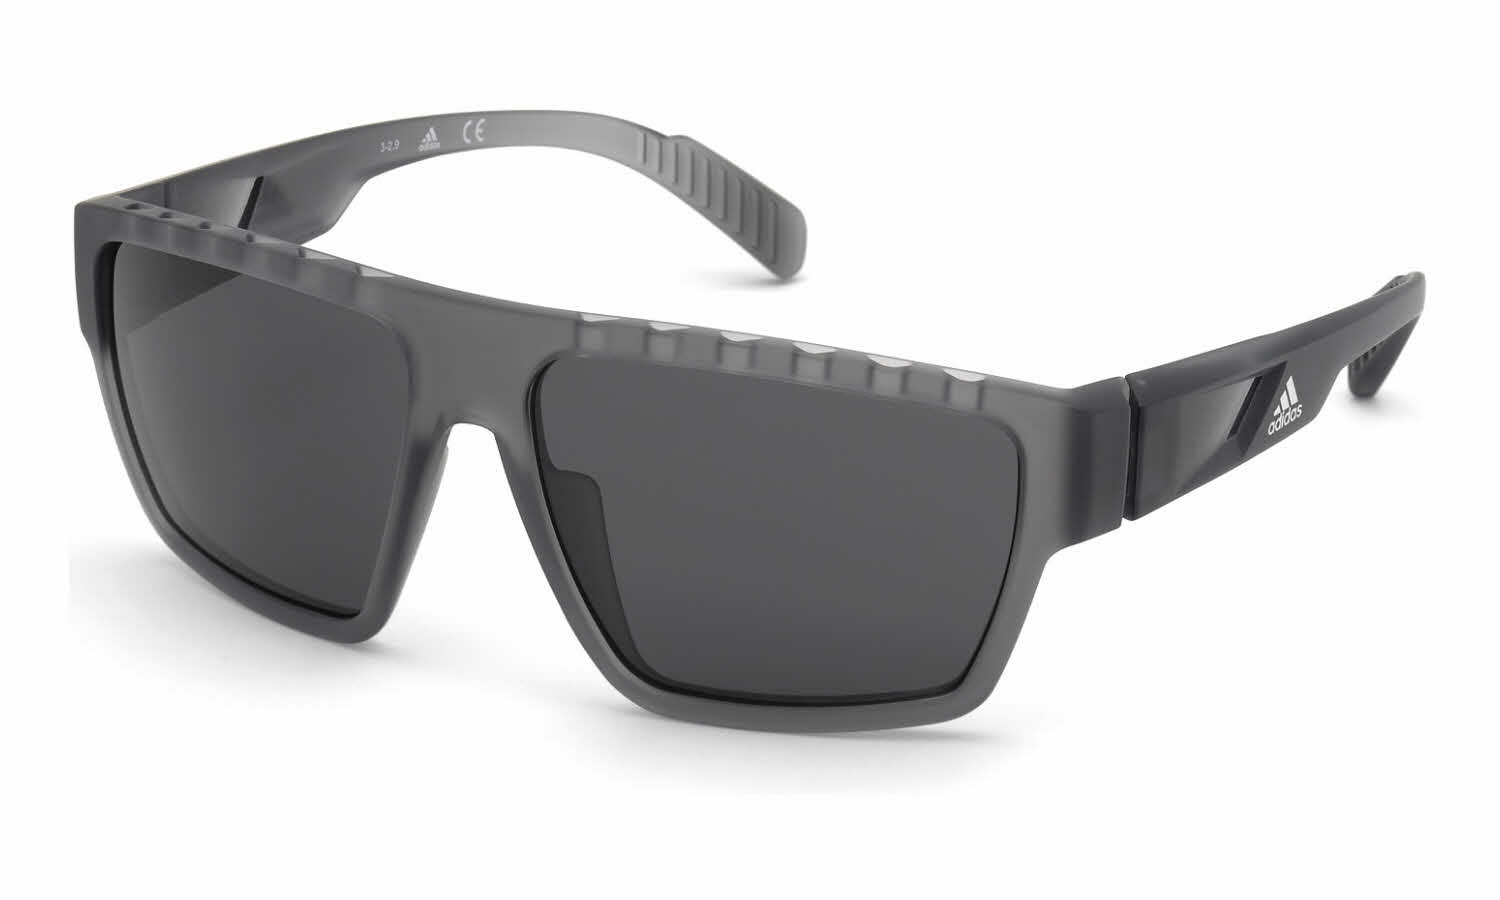 Adidas SP0008 Sunglasses